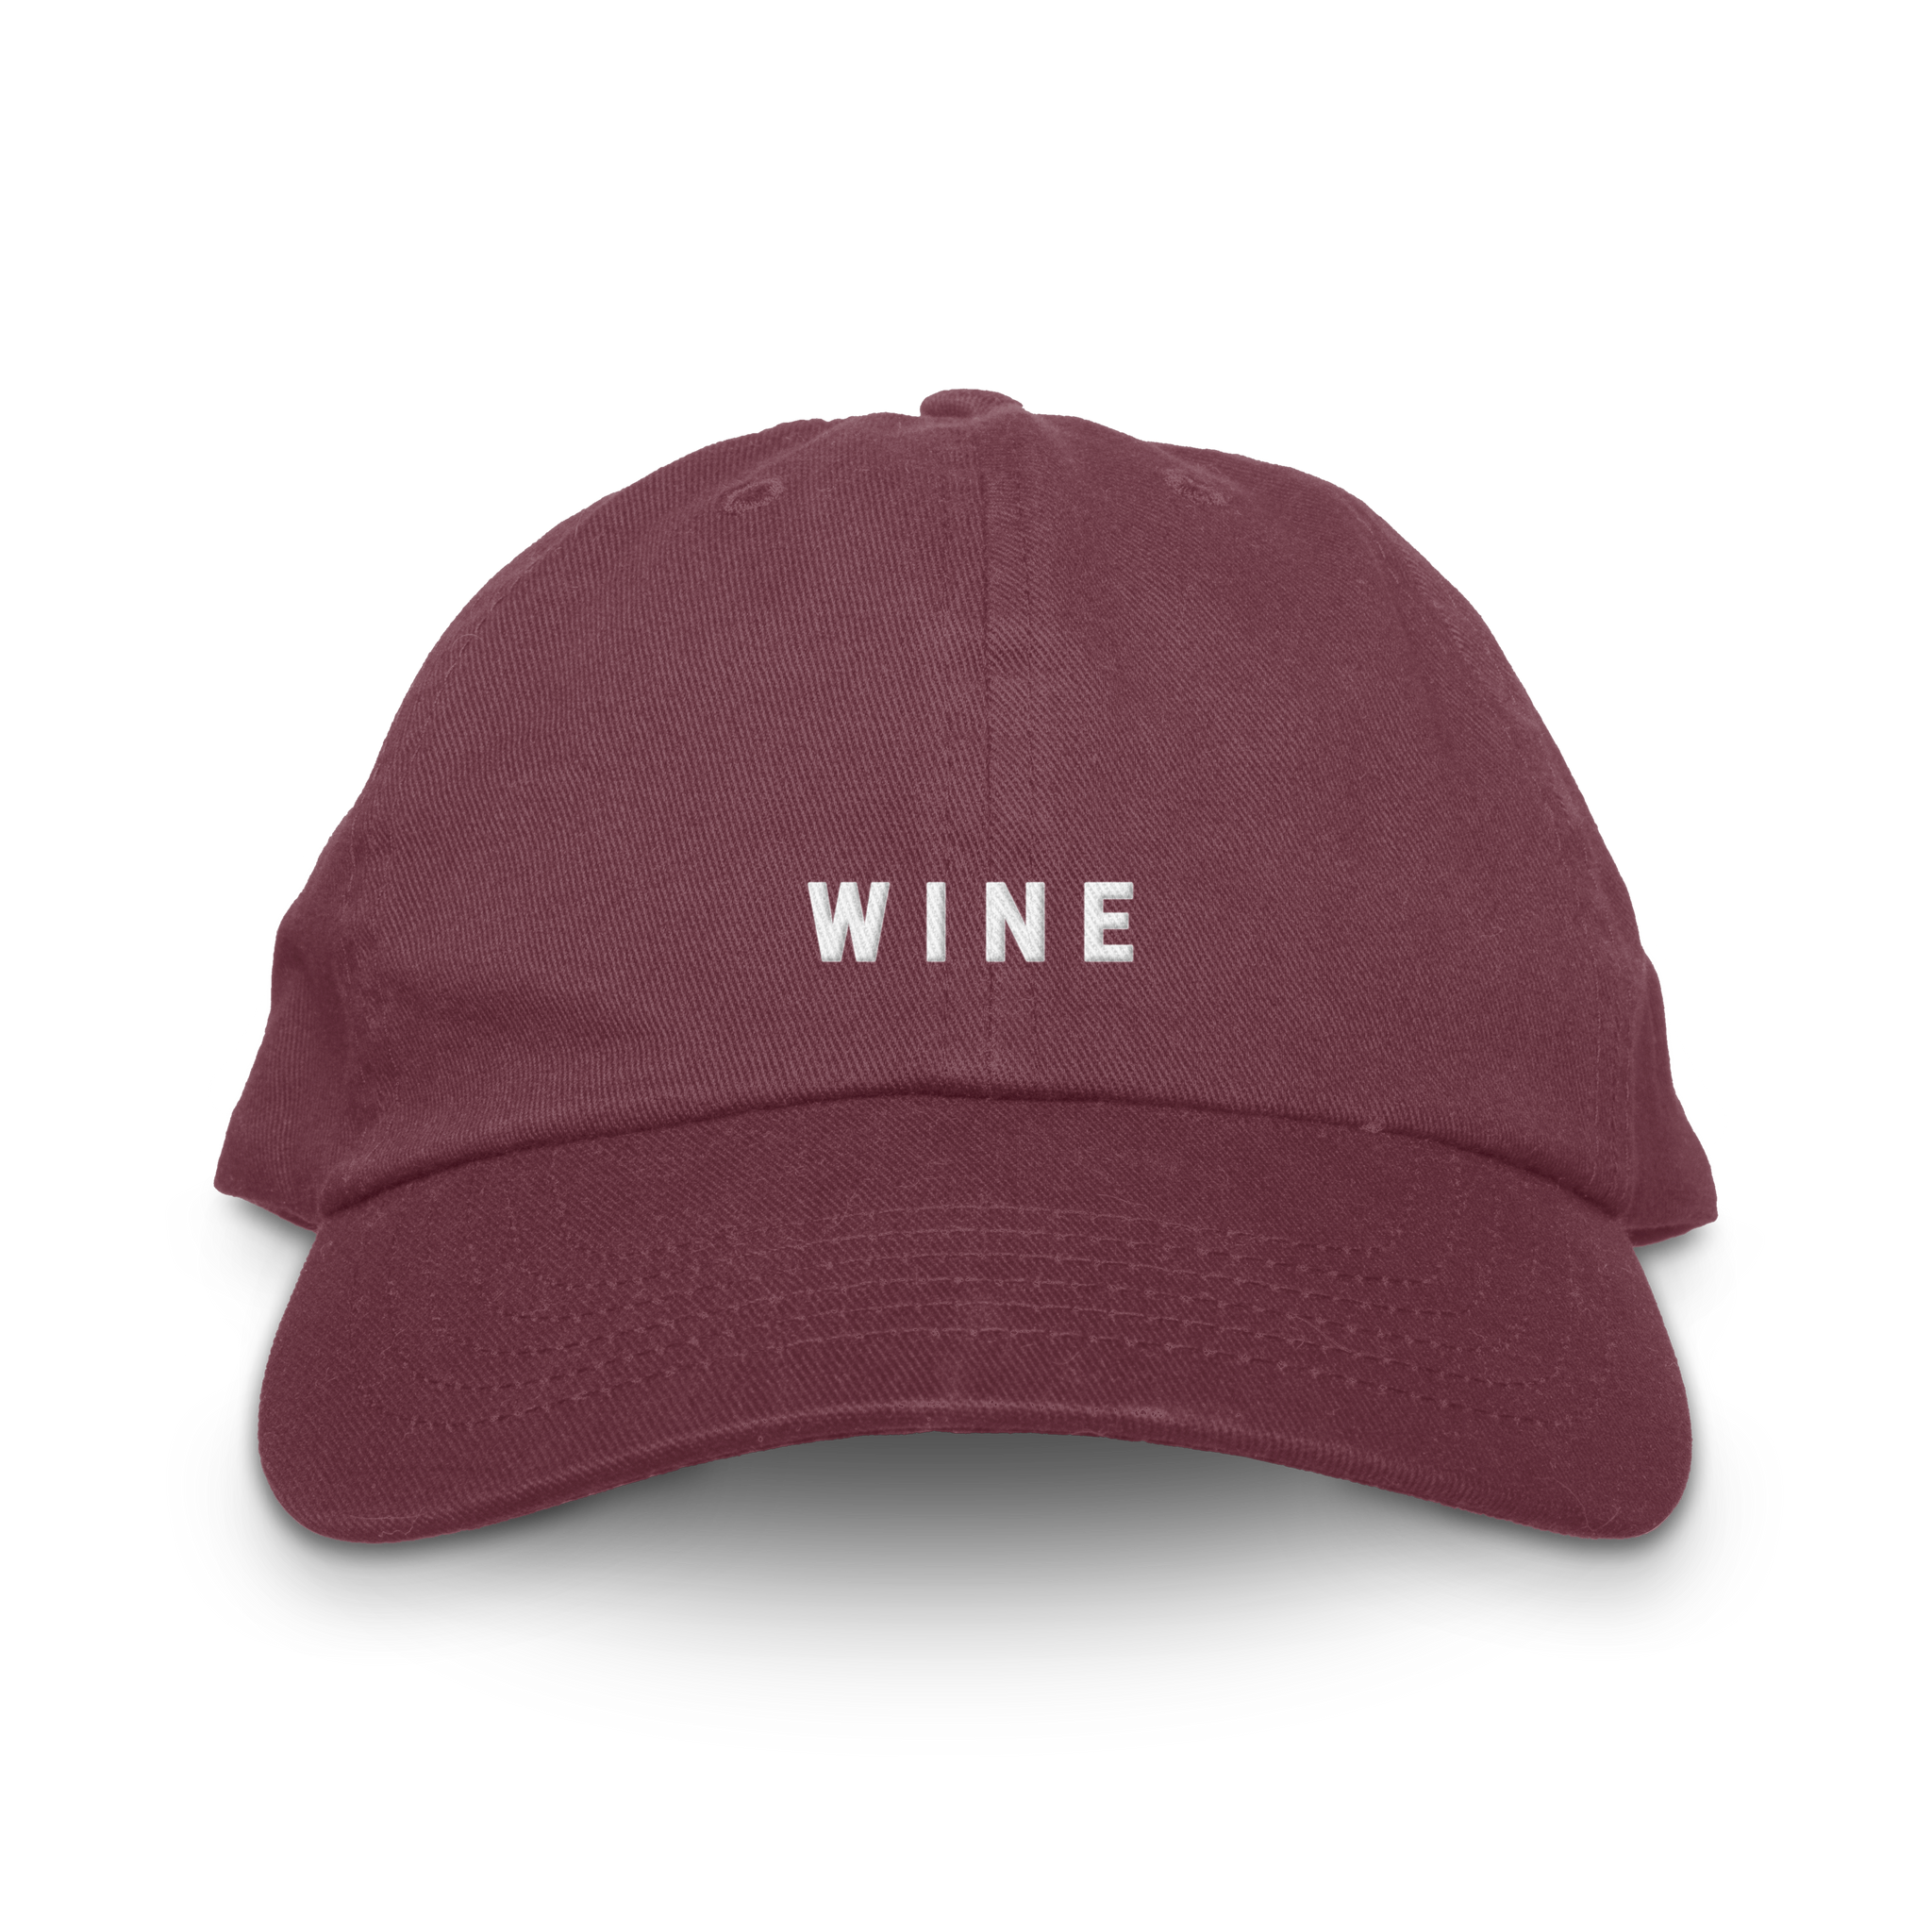 The Wine Hat